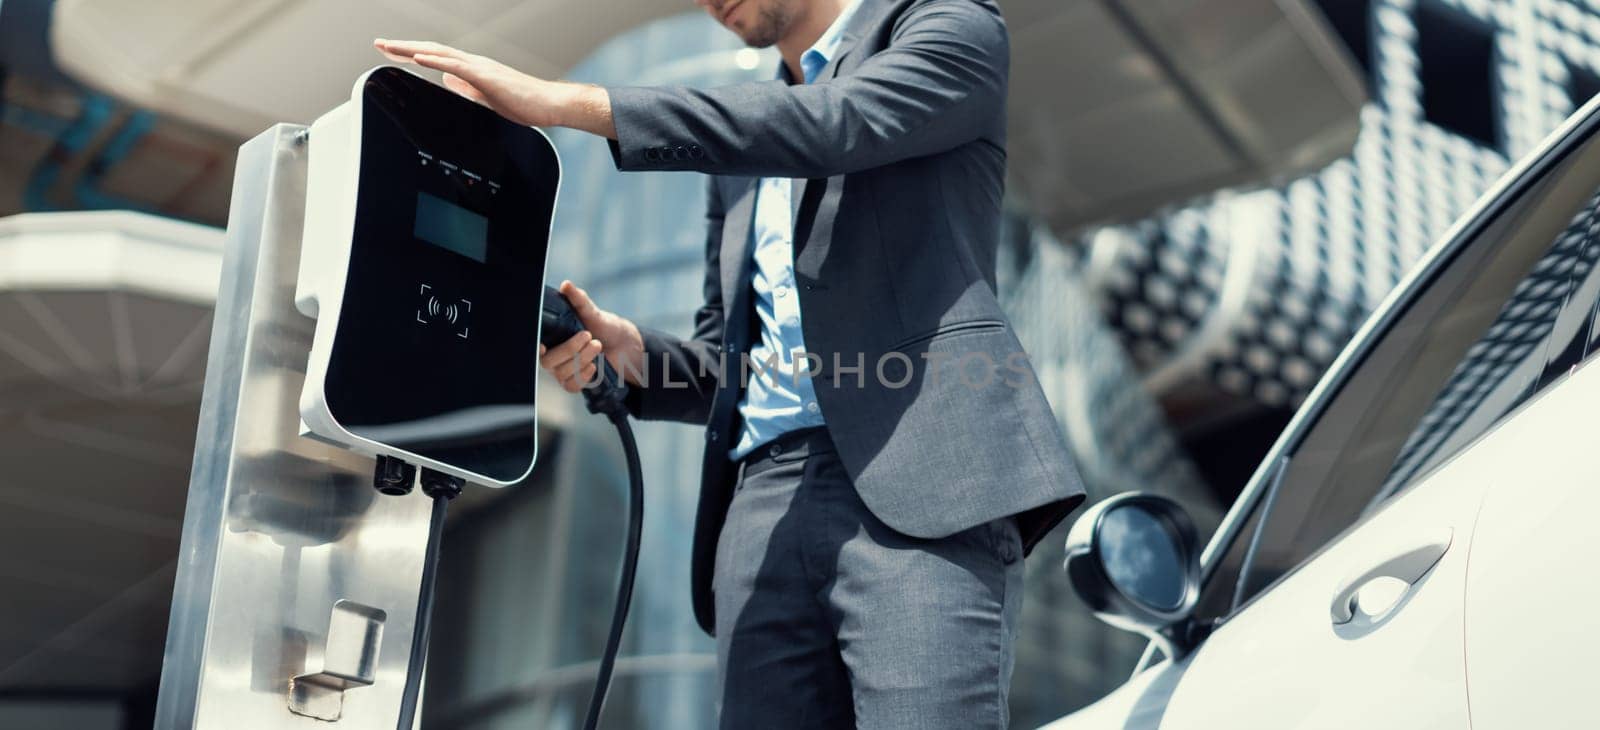 Progressive businessman with EV car at public parking car charging station. by biancoblue